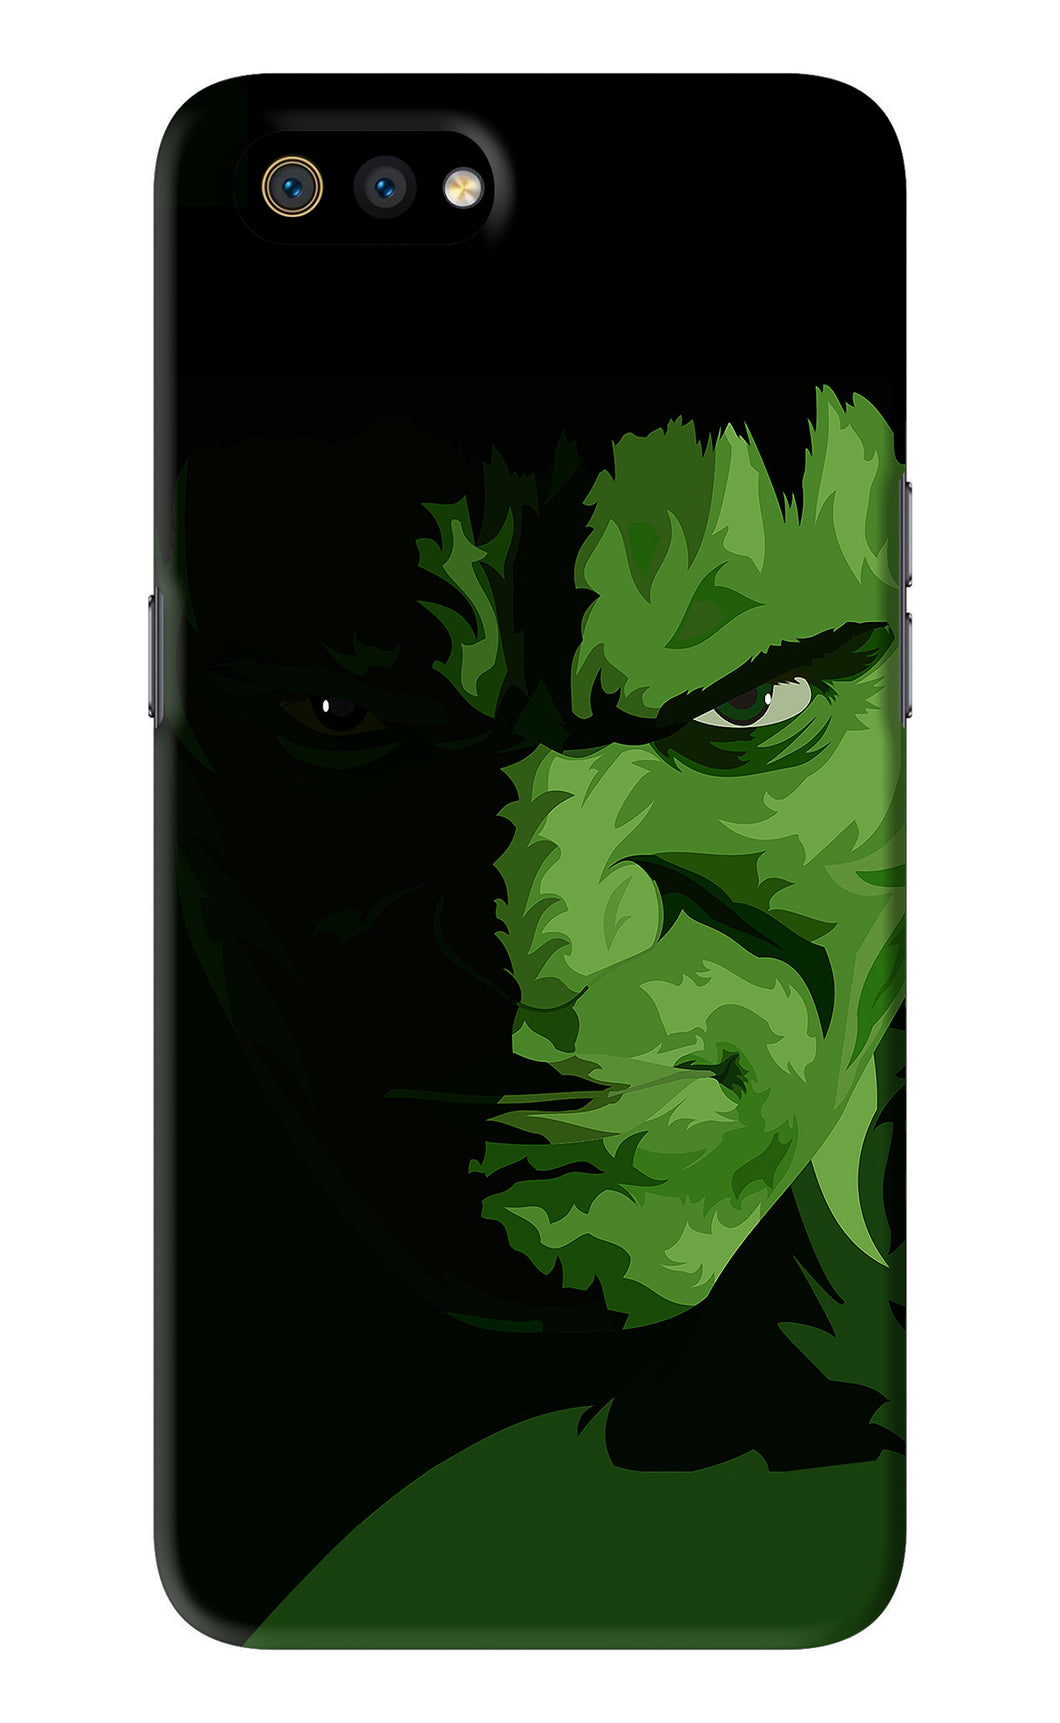 Hulk Realme C2 Back Skin Wrap